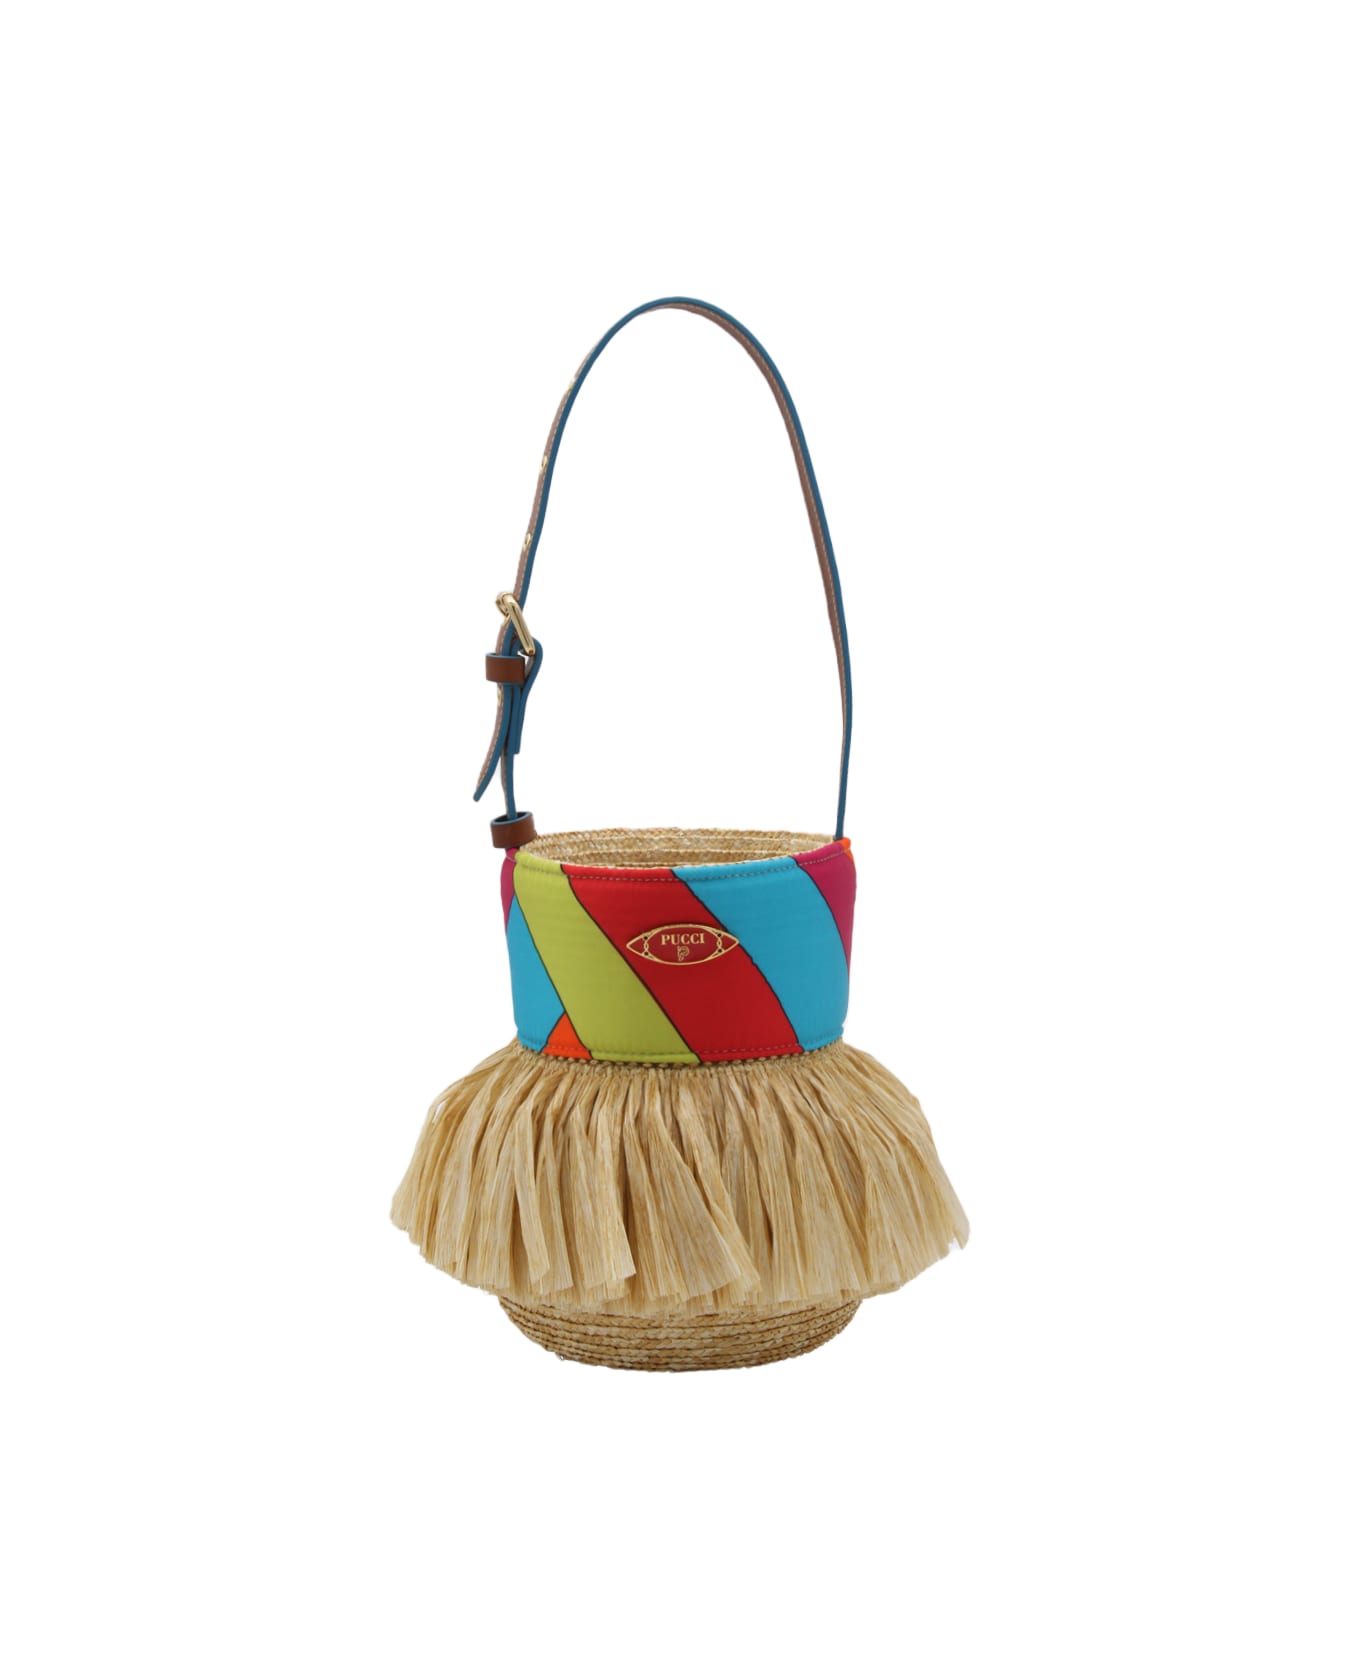 Pucci Multicolor Puccinella Bag - NATURAL+ARANCIO/FUXI ショルダーバッグ